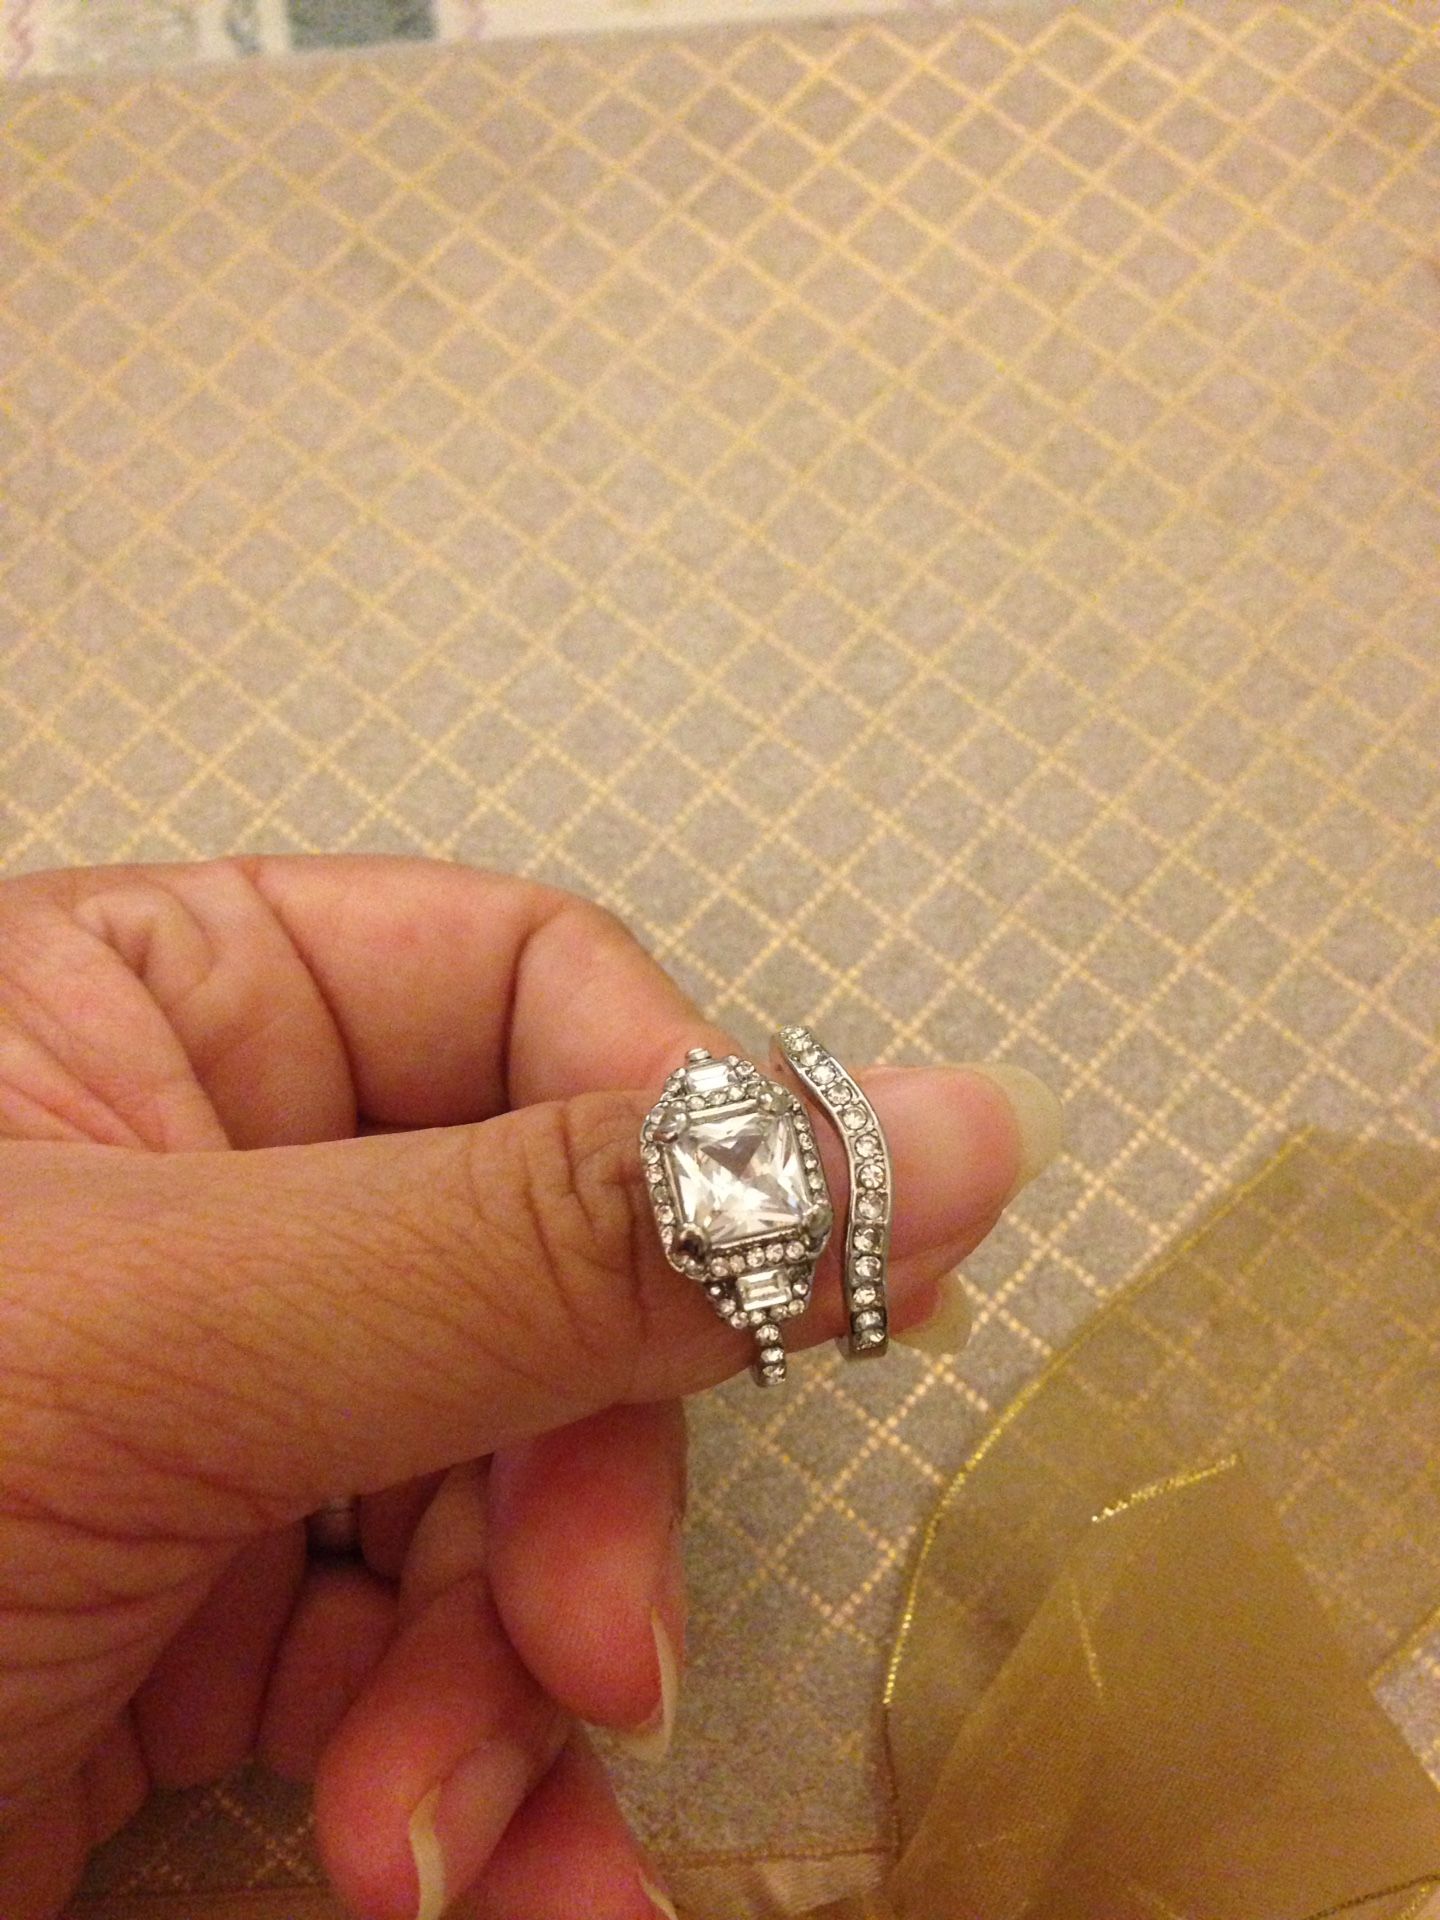 Princess cut cz diamond silver plated wedding ring set size 8